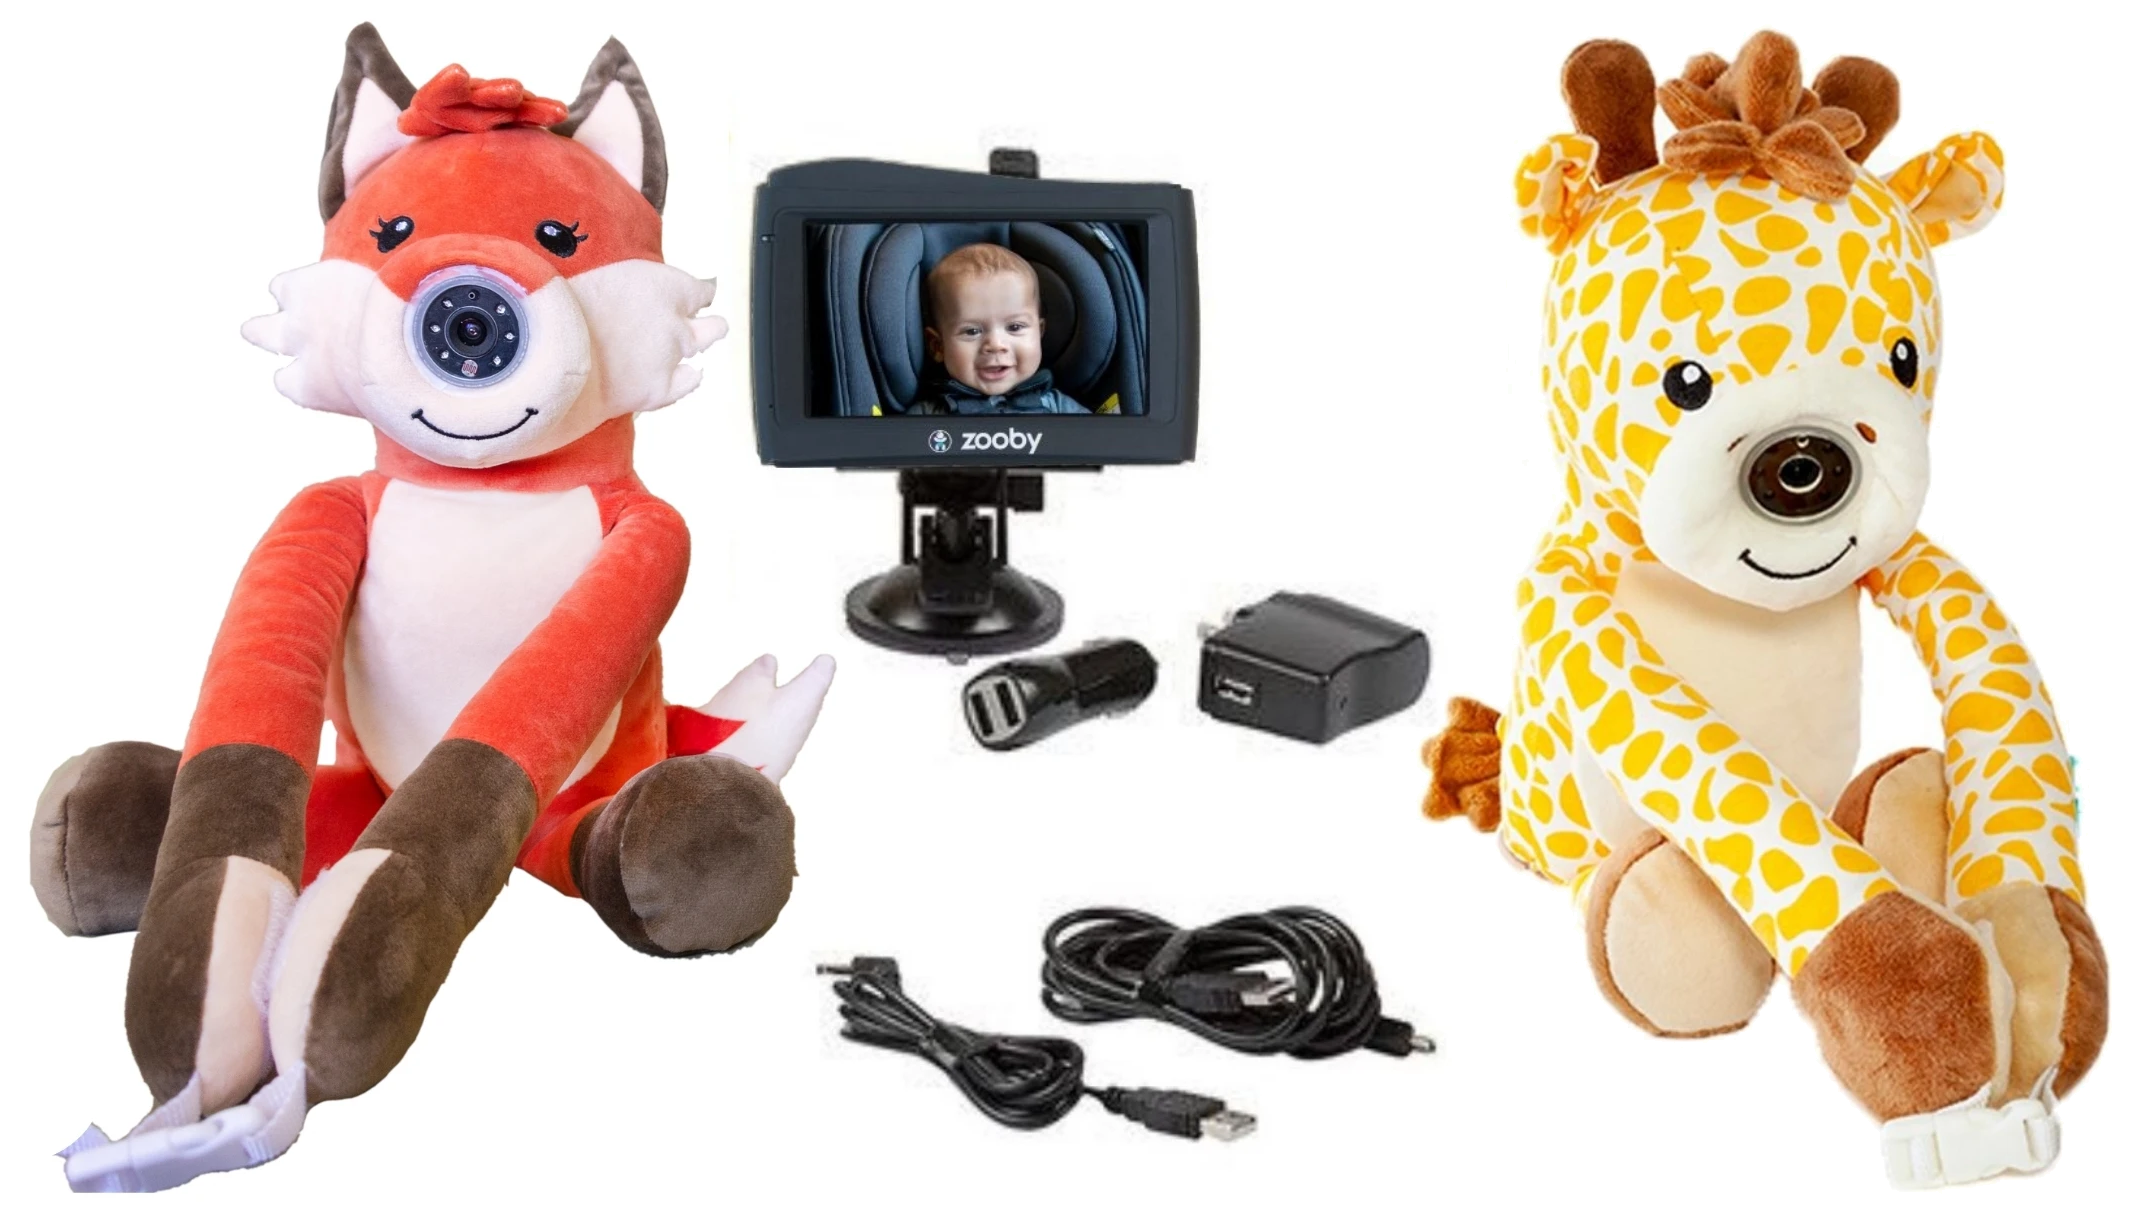 infanttech zooby kin Baby Monitor (Fox and Giraffe 2-1 Combo)